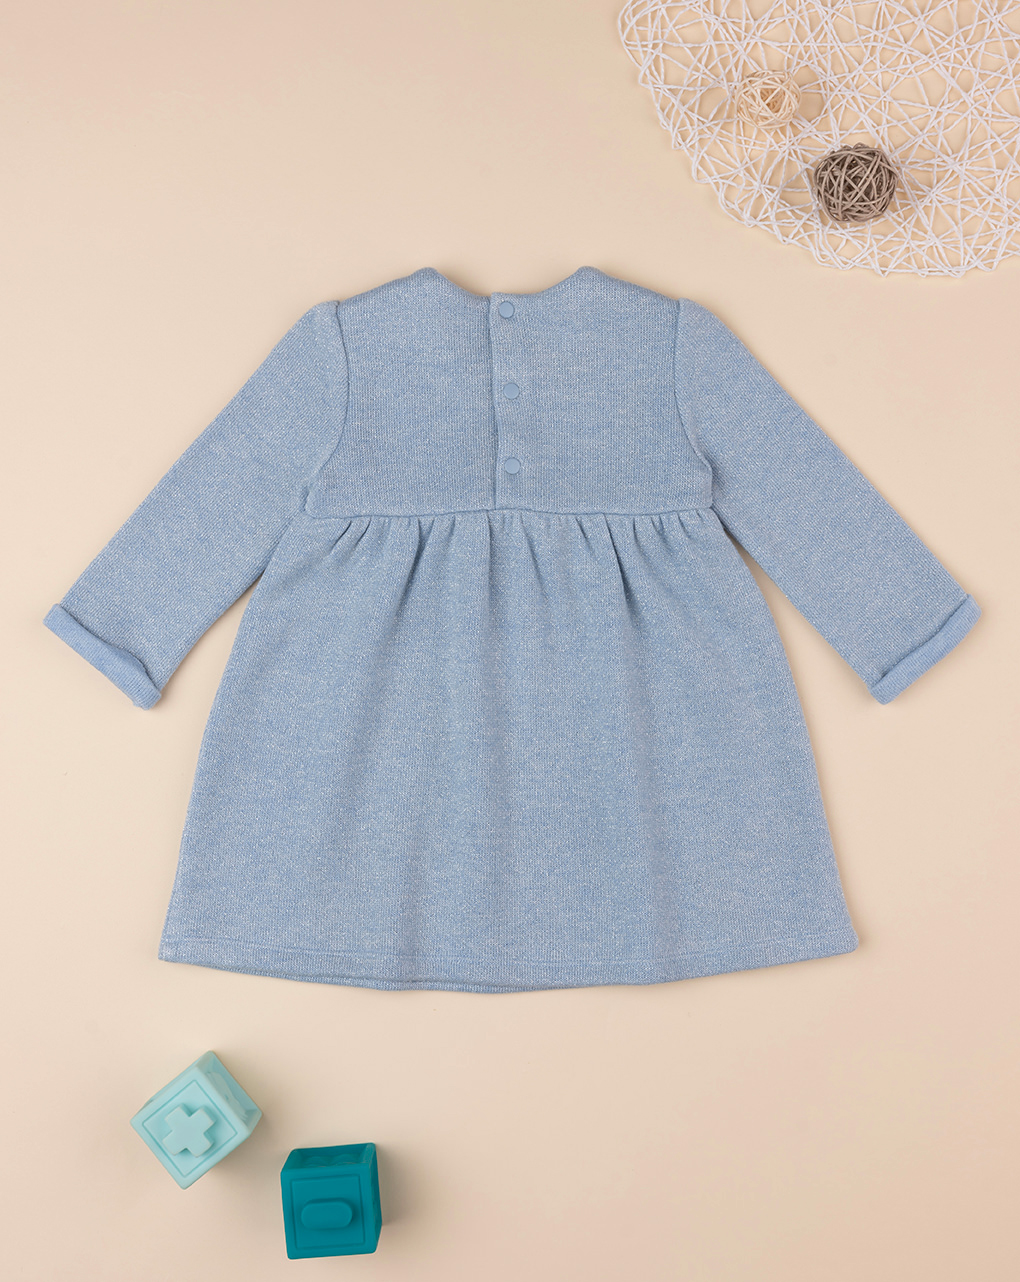 Vestido de bebé de lúrex azul claro - Prénatal